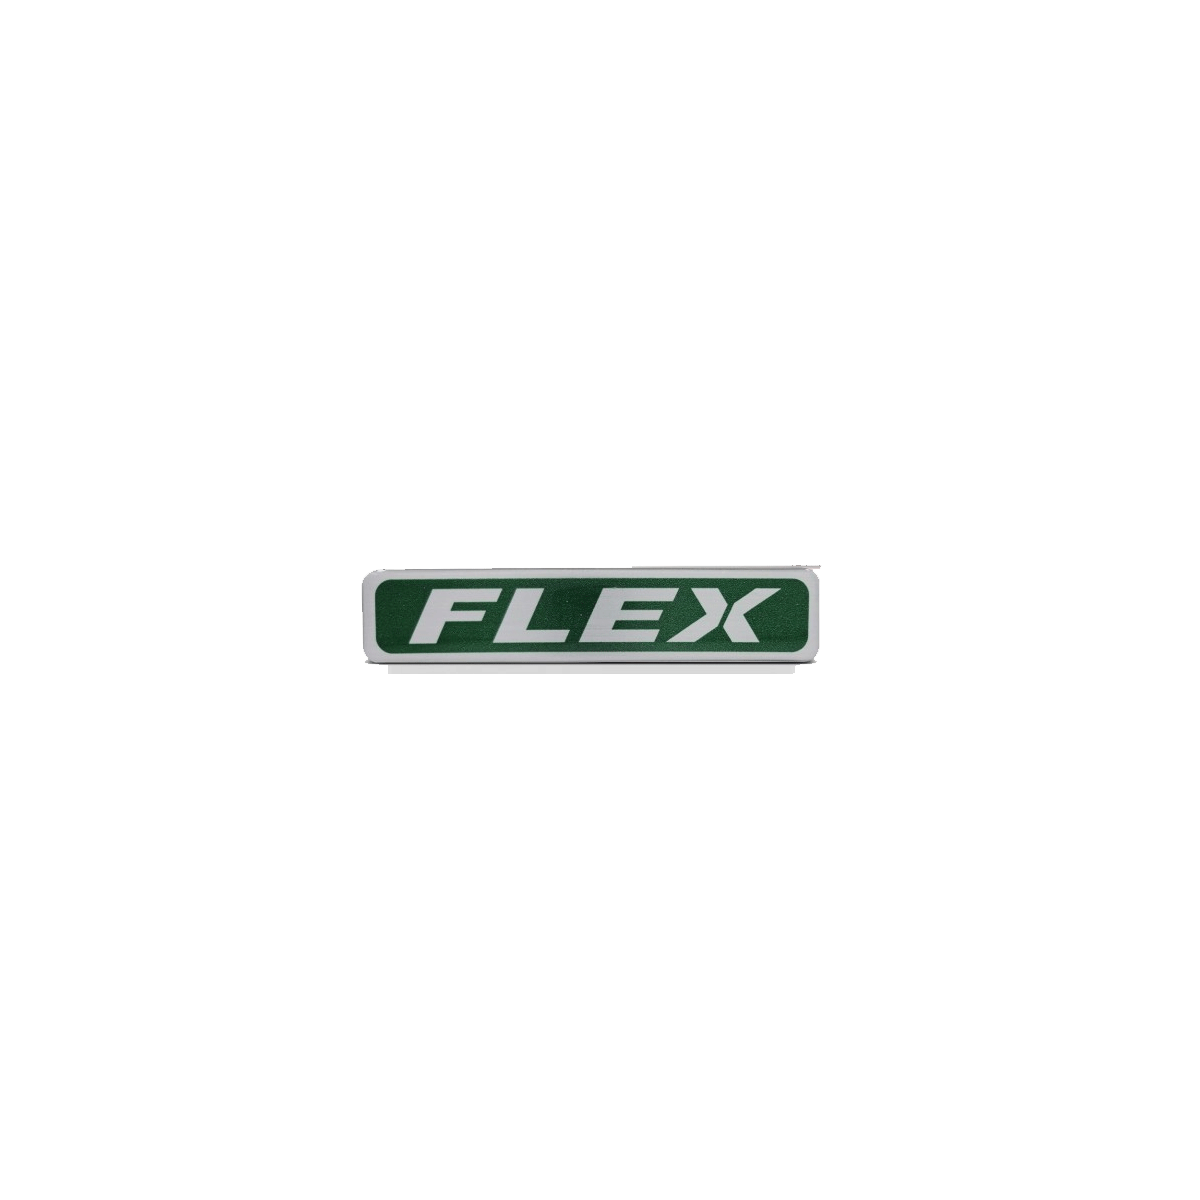 Emblema Flex Fiat Resinado